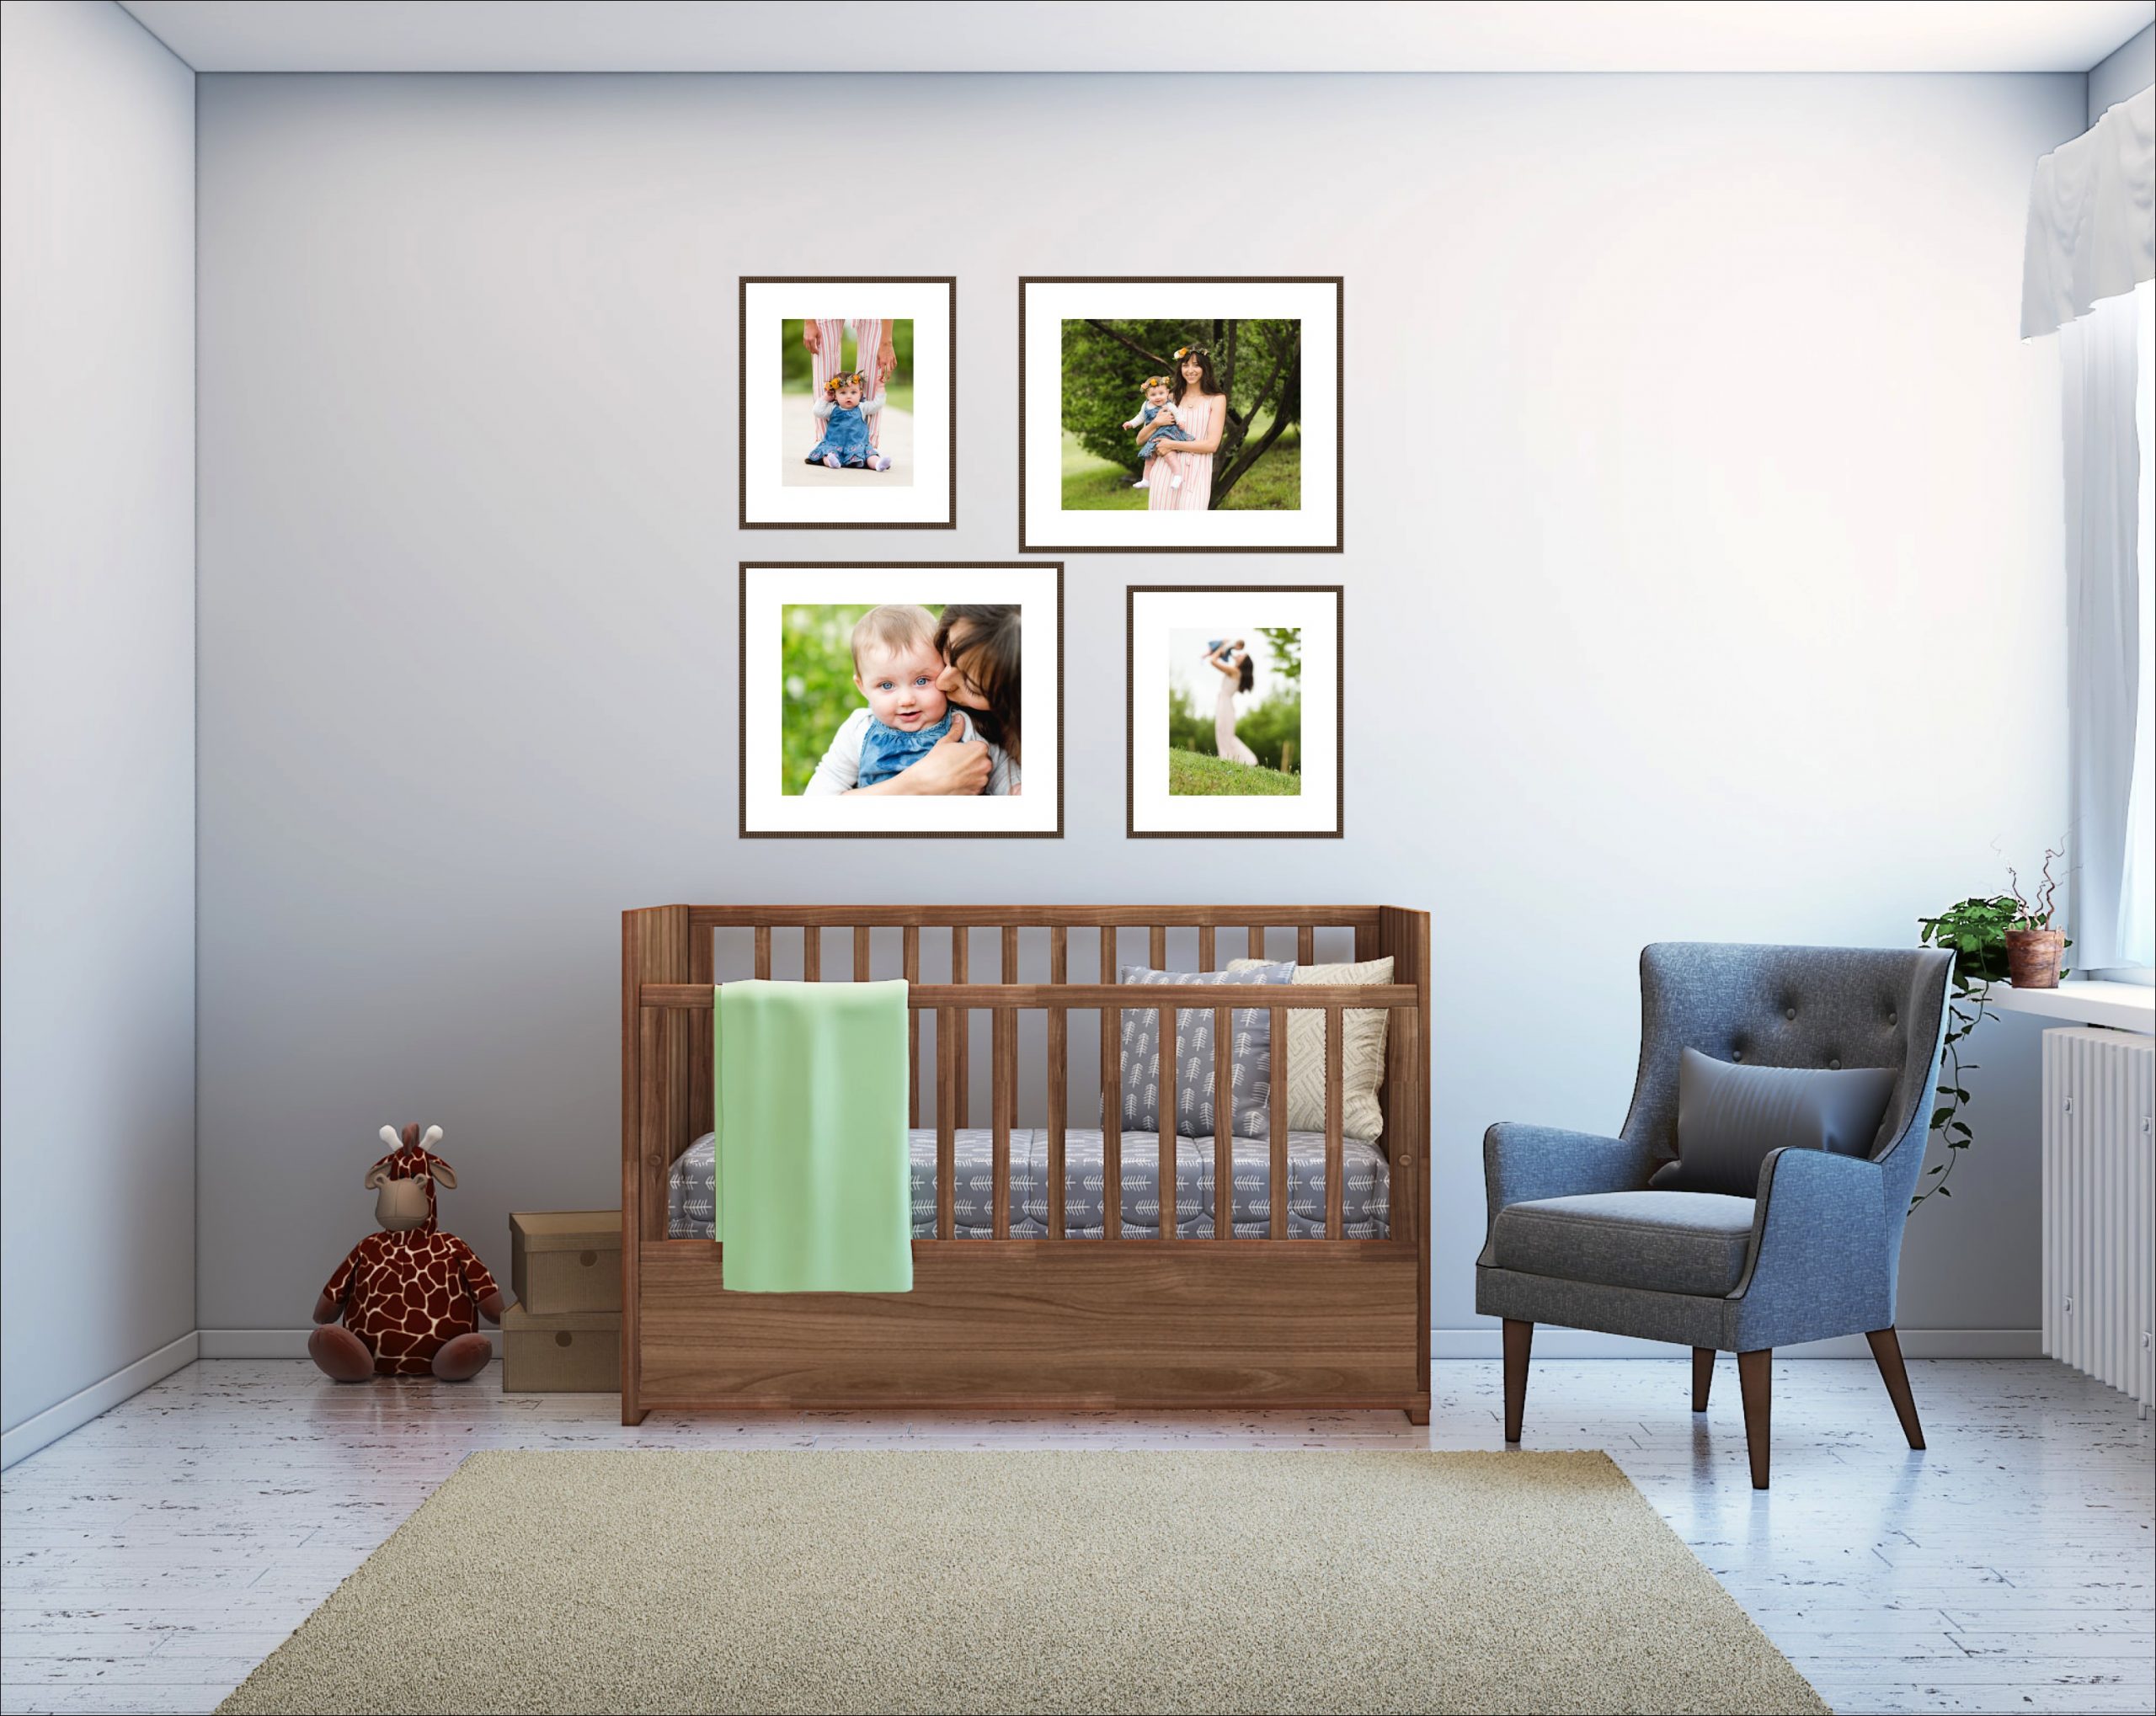 framed artwork of mom and baby above crib